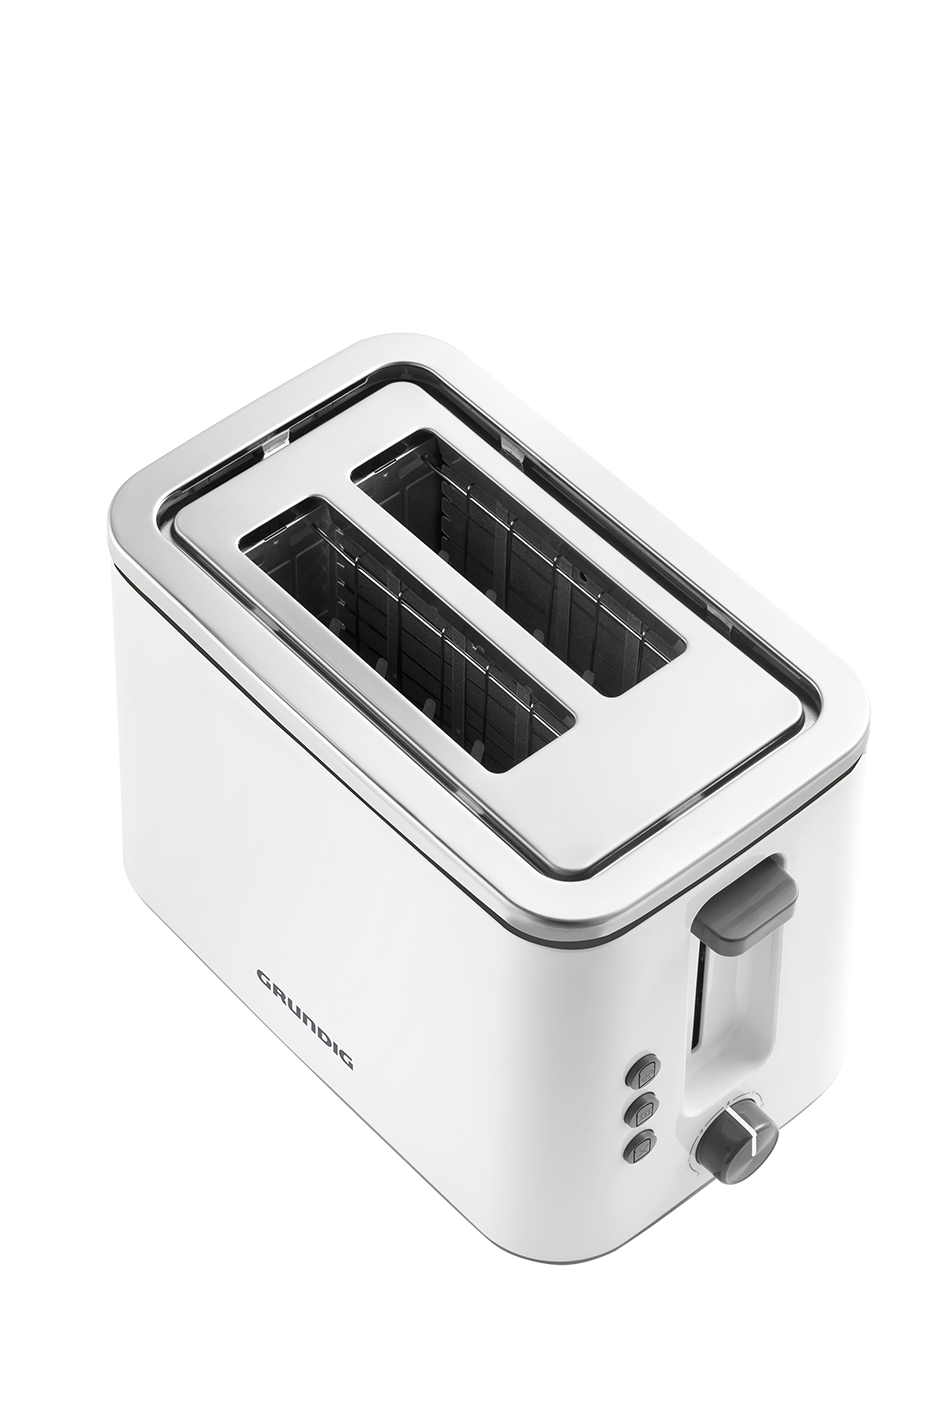 TA 5860-New Line Toaster-2 slots